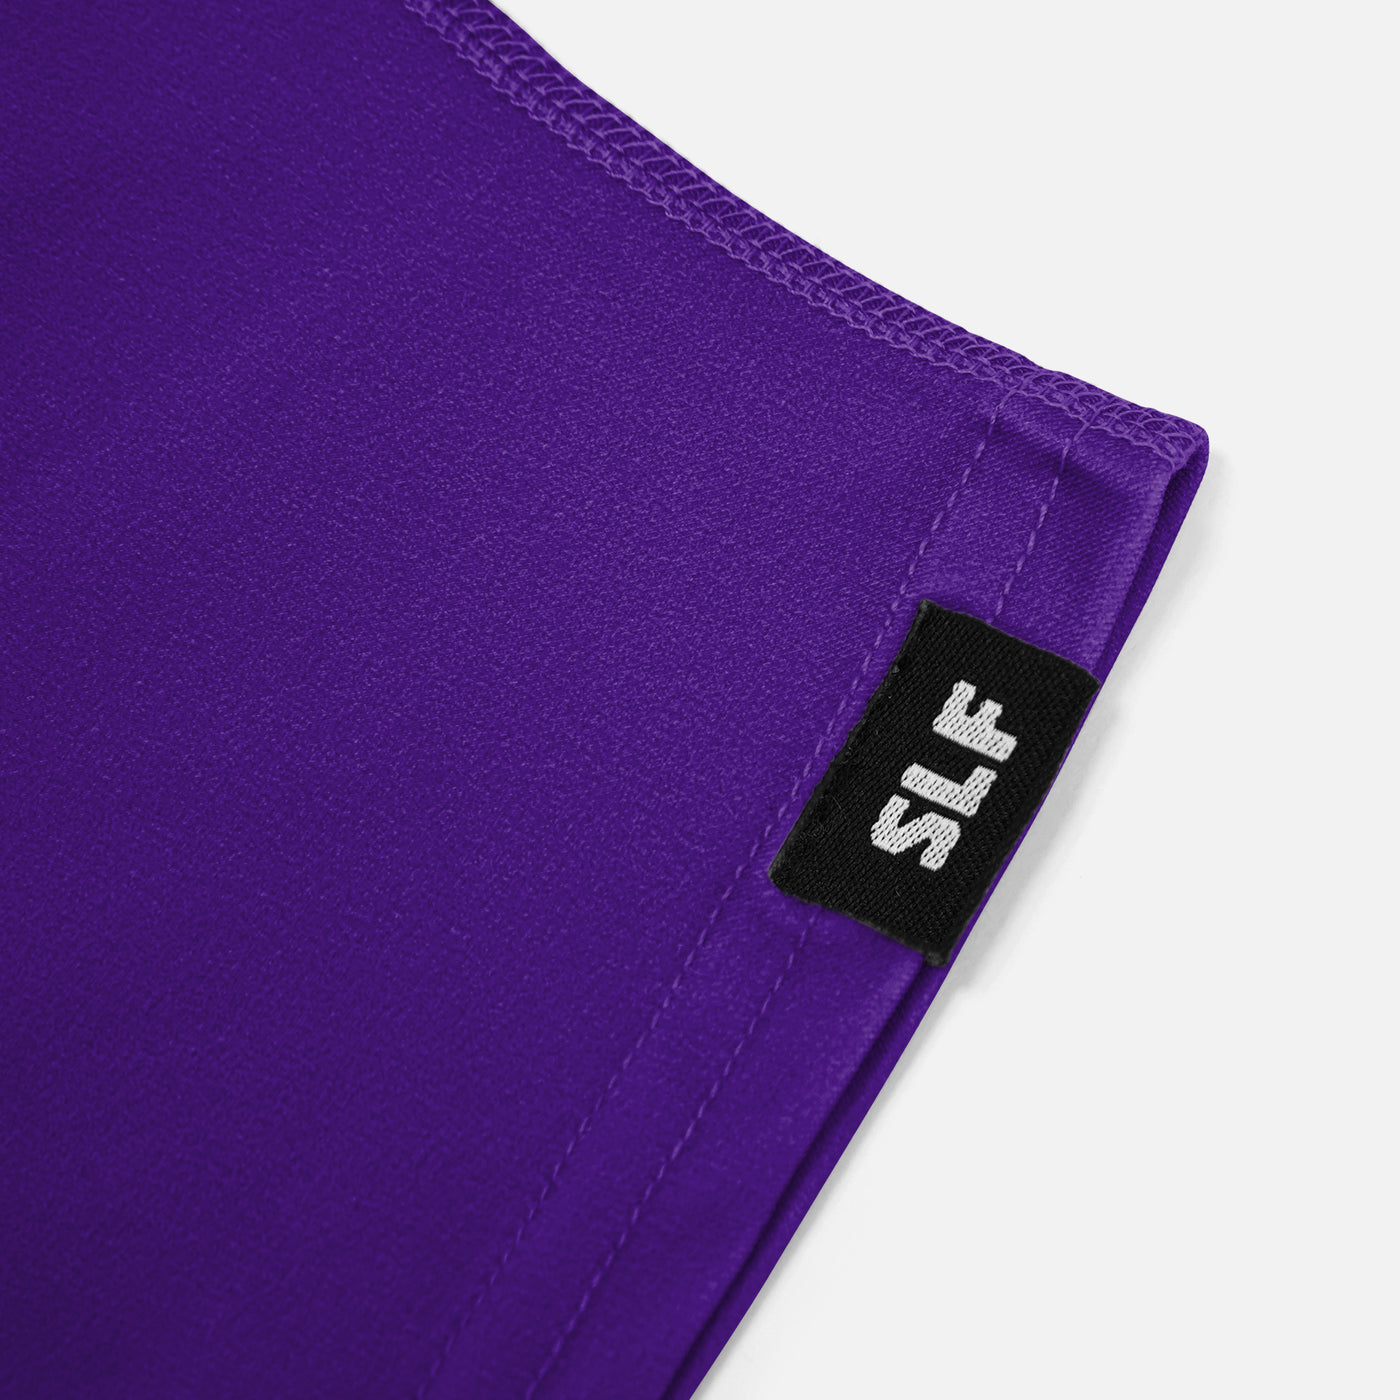 Hue Purple Kids Spats / Cleat Covers